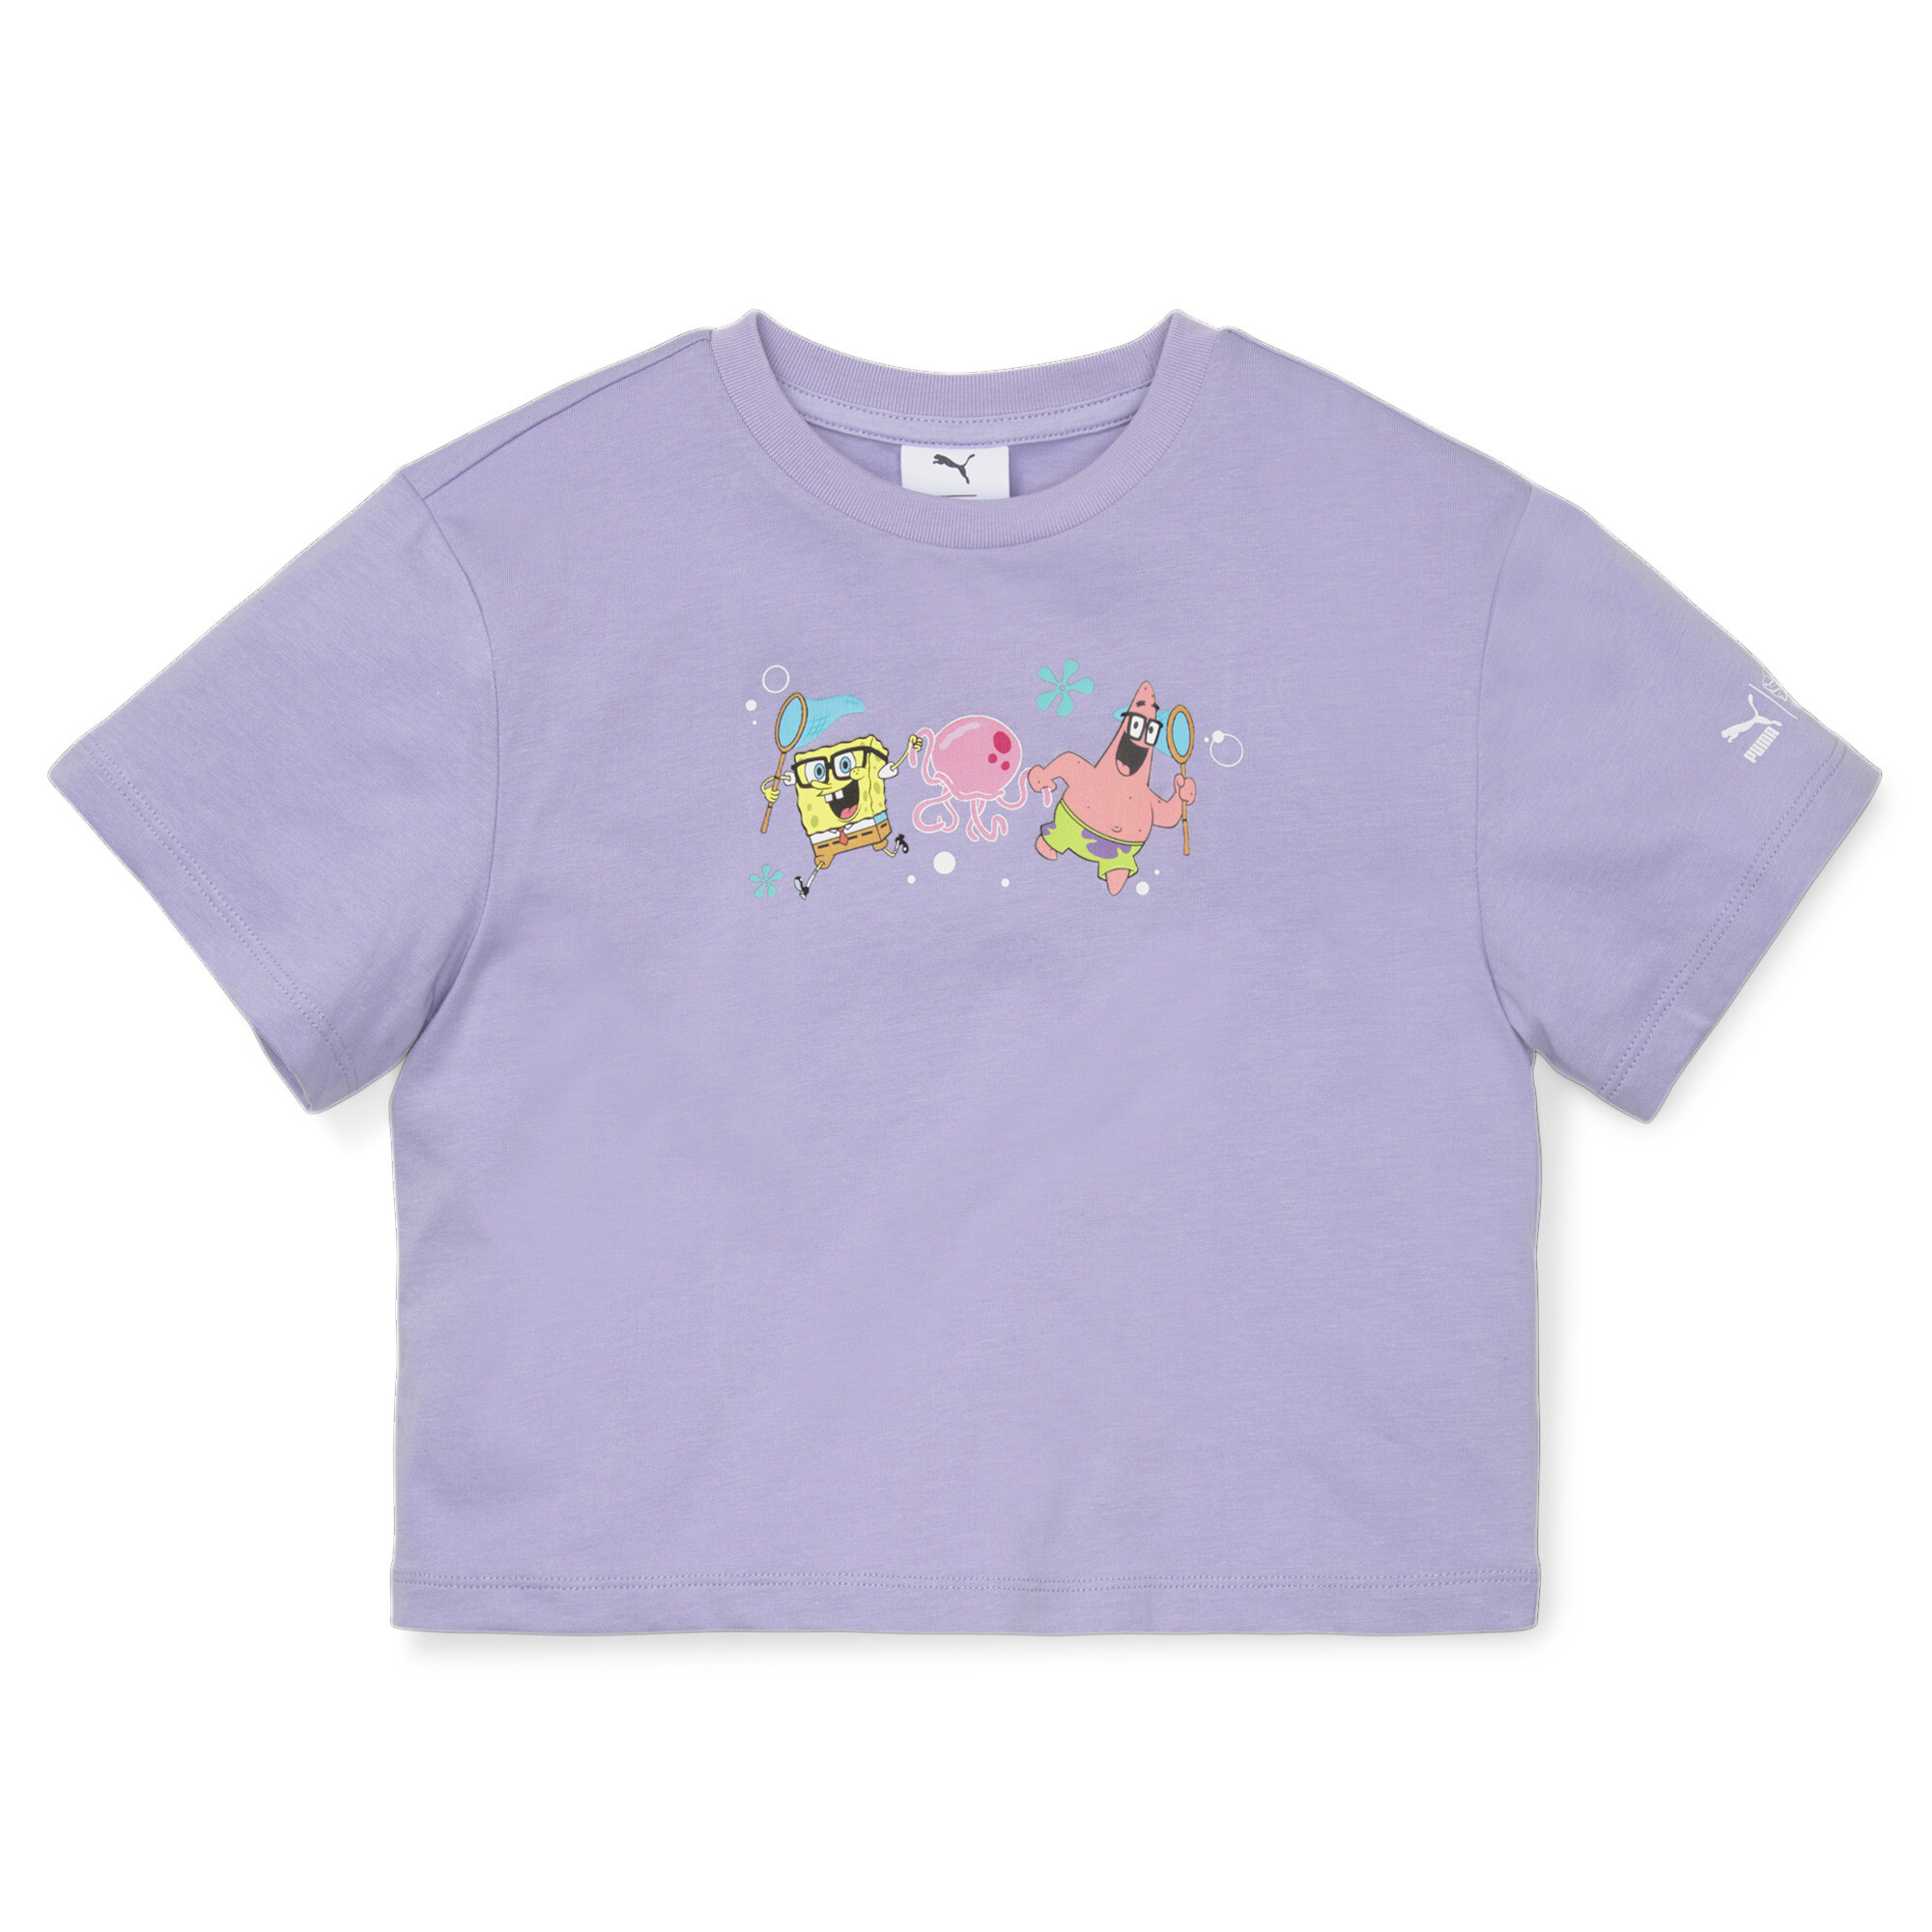 PUMA X SPONGEBOB T-Shirt Kids In Purple, Size 9-10 Youth